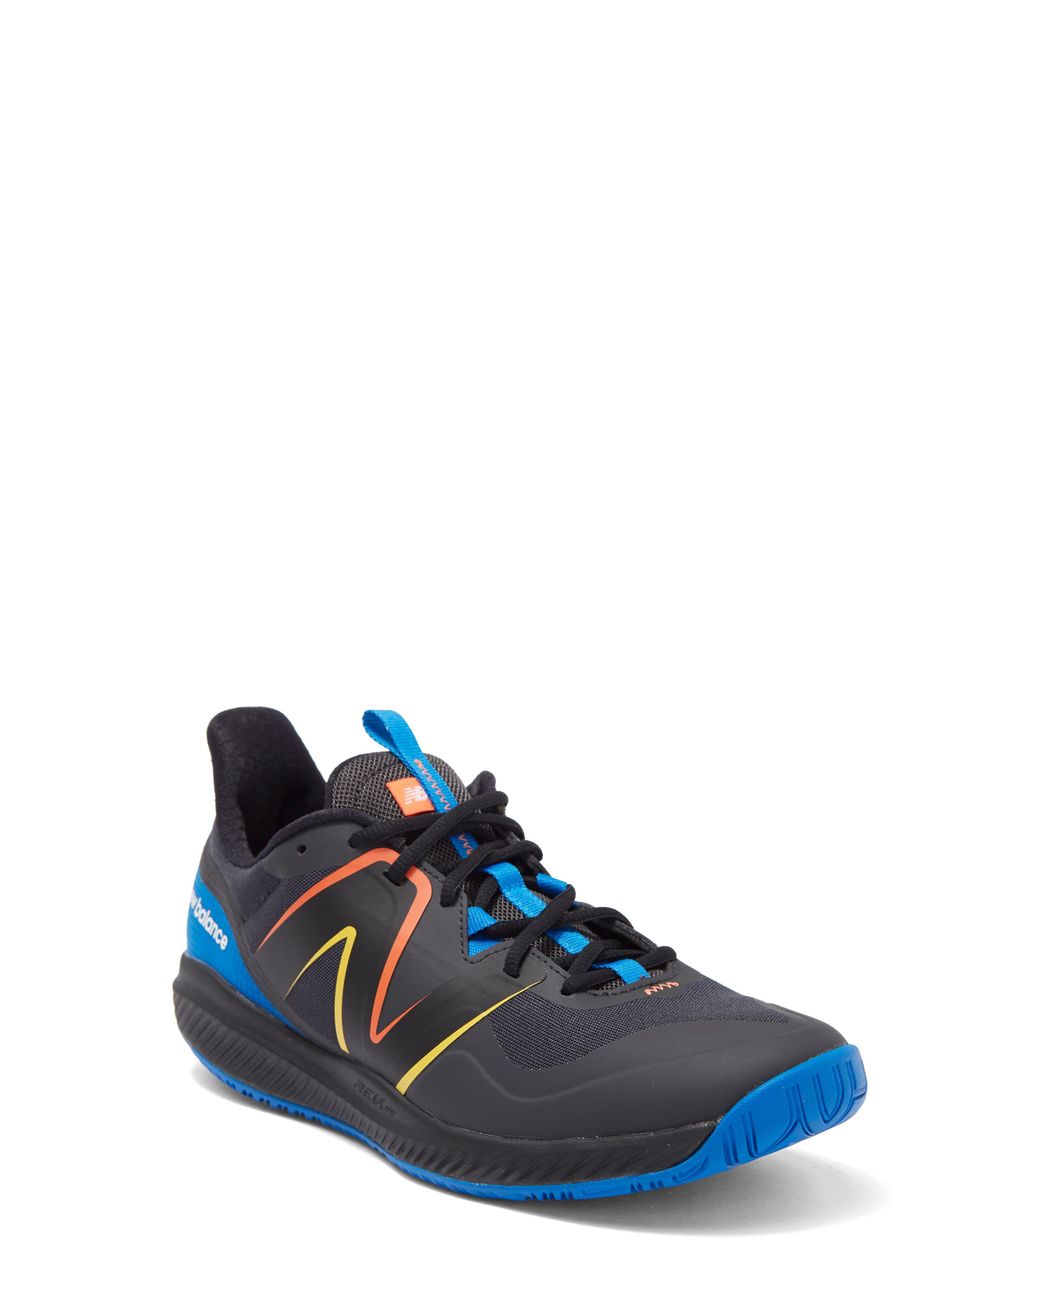 New Balance 796v3 Tennis Shoe In Black/serene Blue At Nordstrom Rack ...